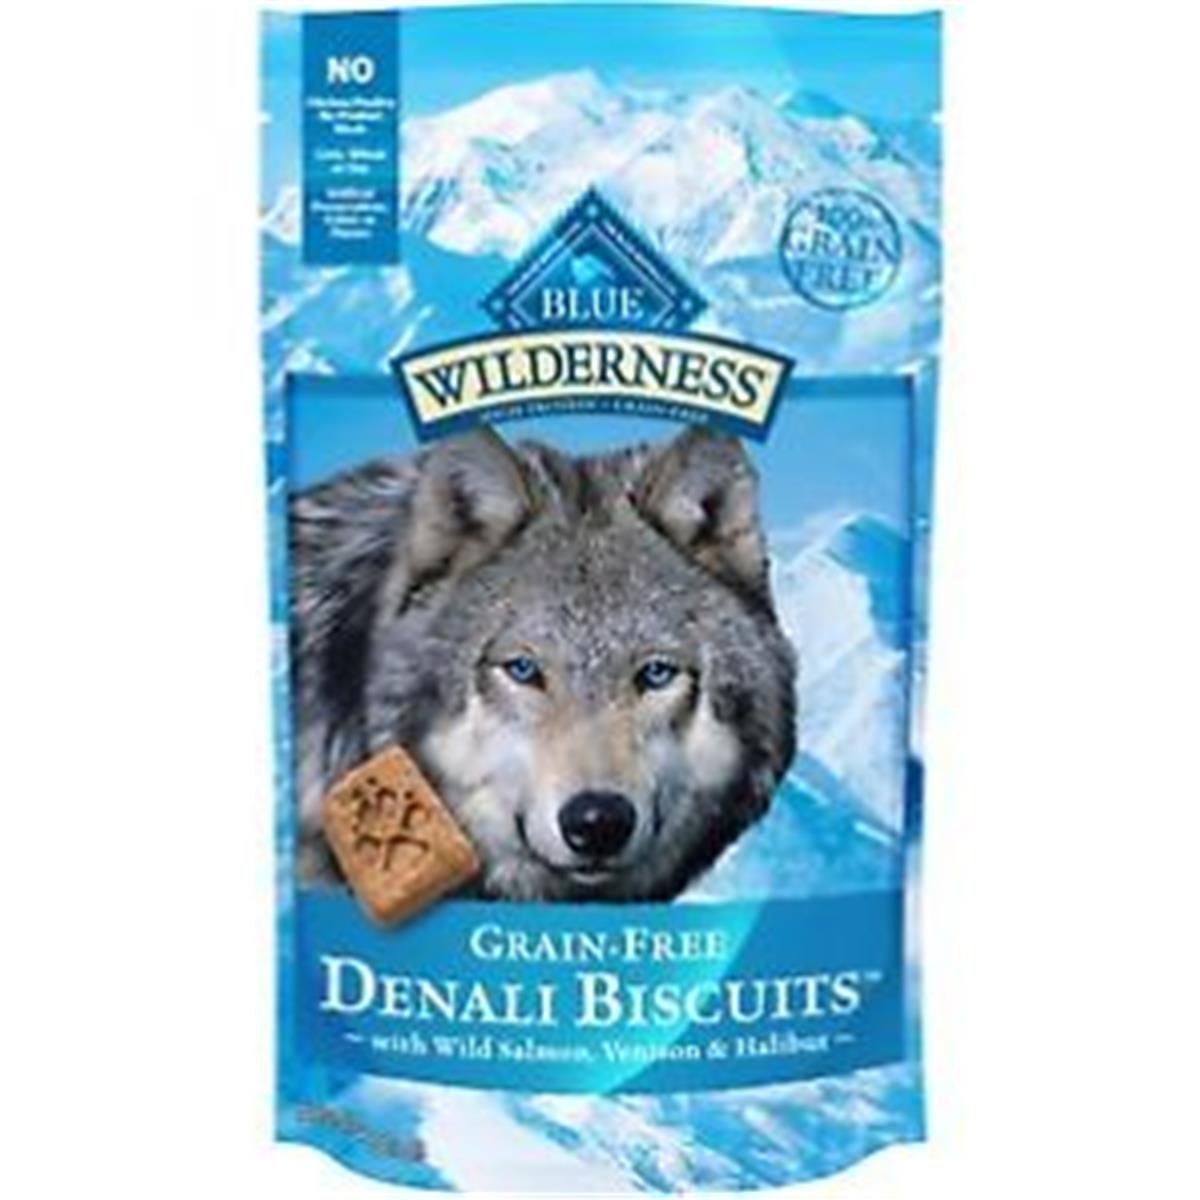 Bb11743 Wilderness Denali Biscuits With Wild Salmon, Venison & Halibut Grain-free Dog Food Treats, 8 Oz